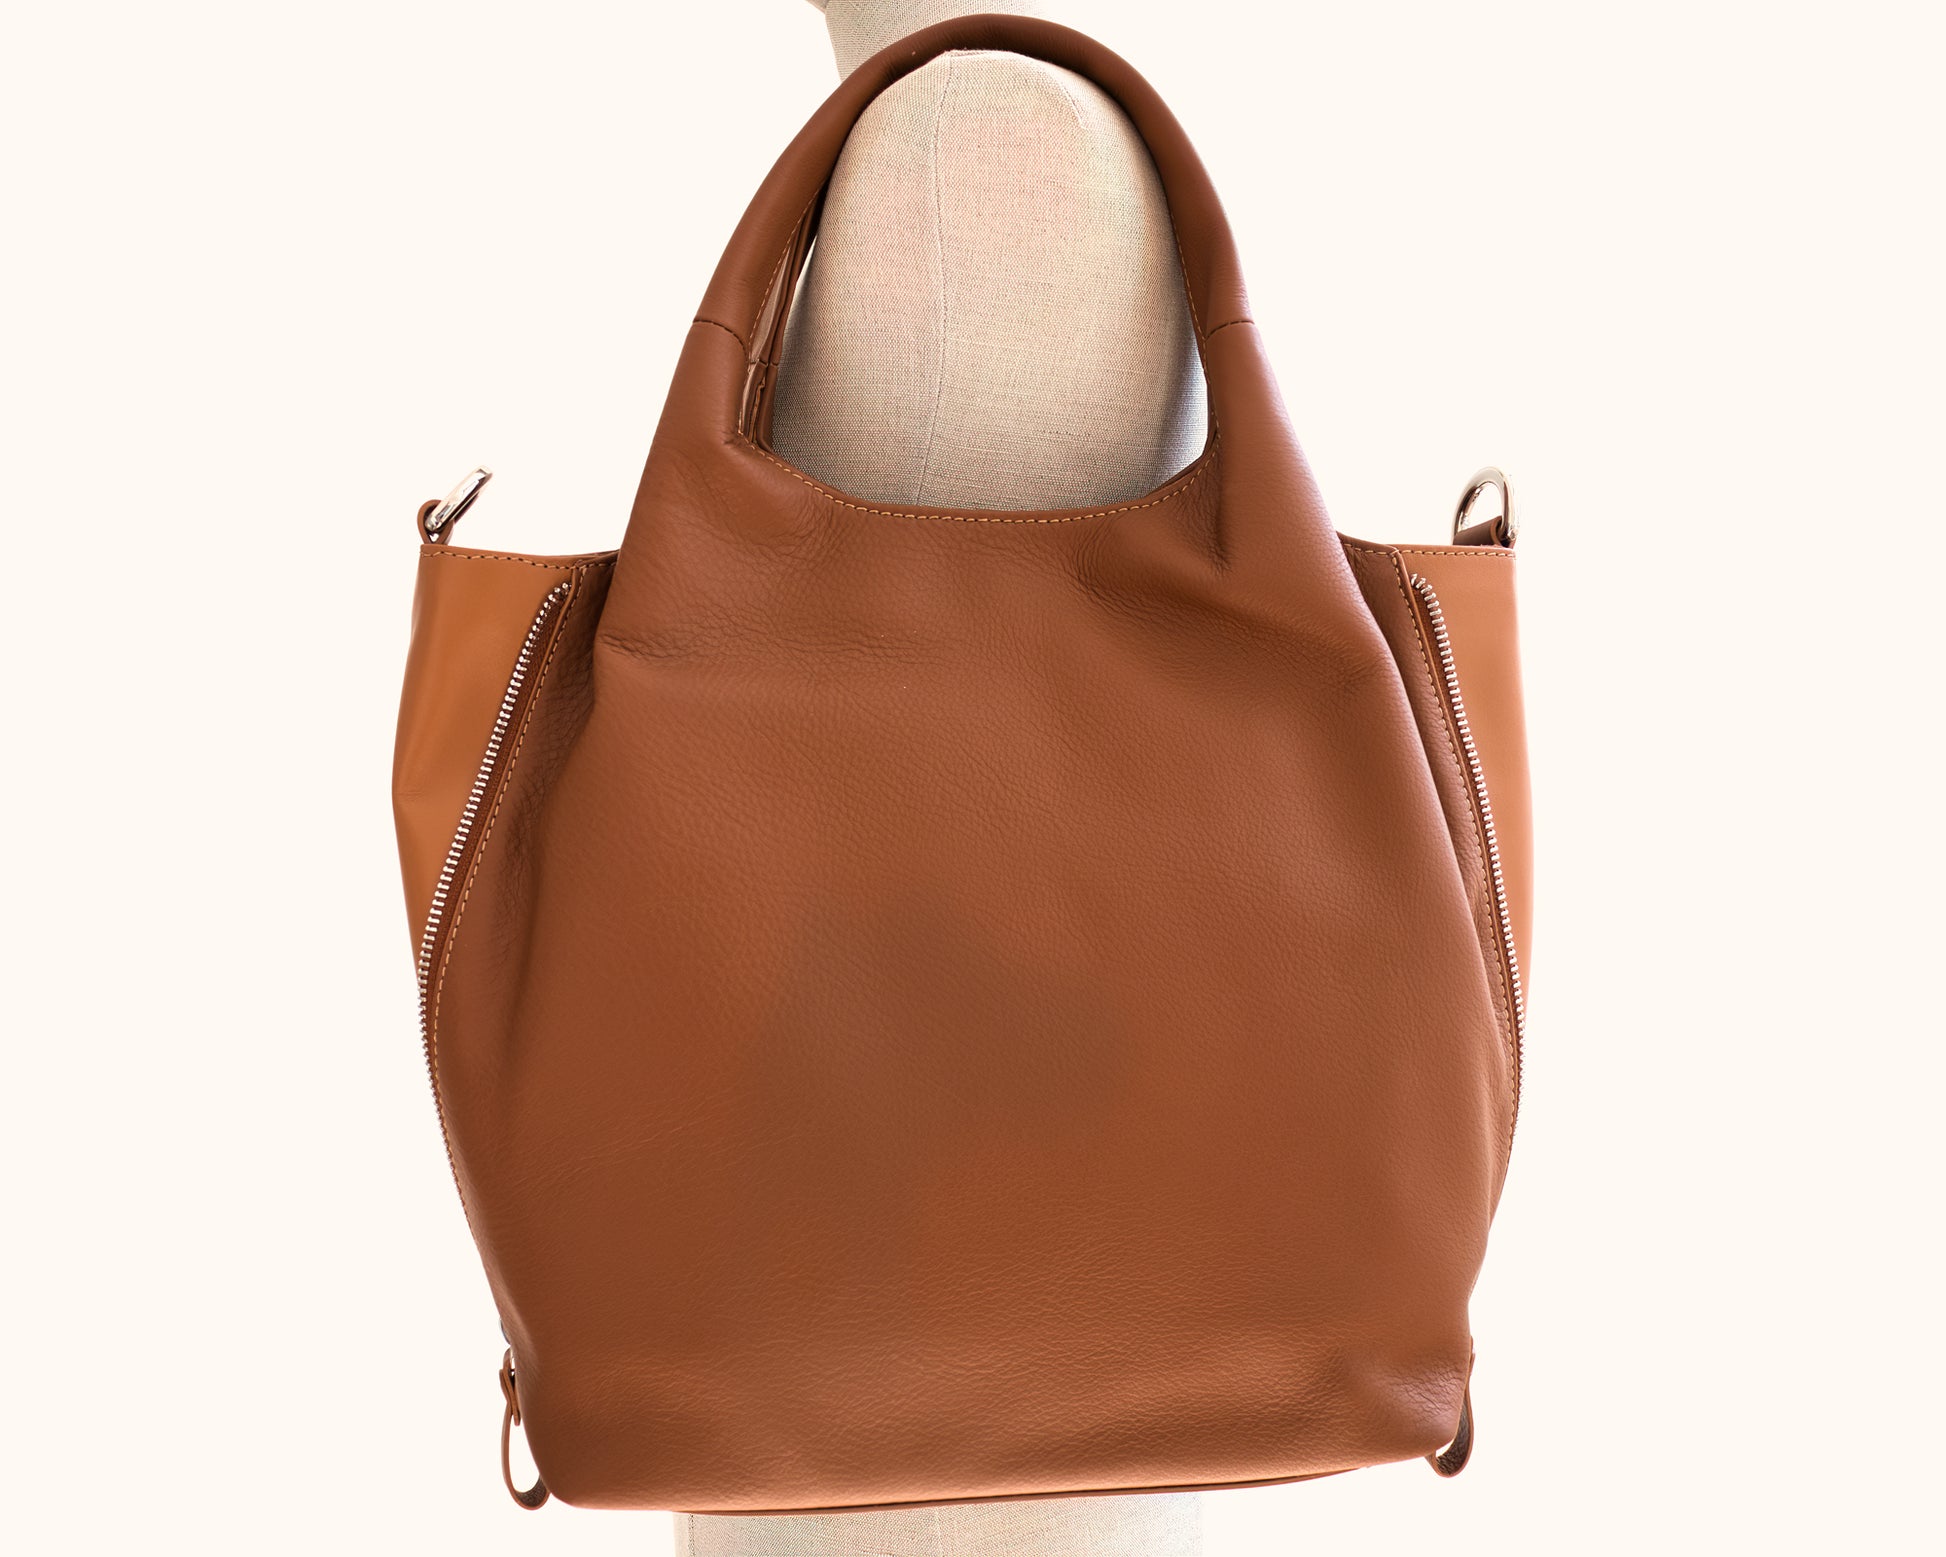 Double Loop Satchel, Camel Brown Italian Leather Tote Bag,